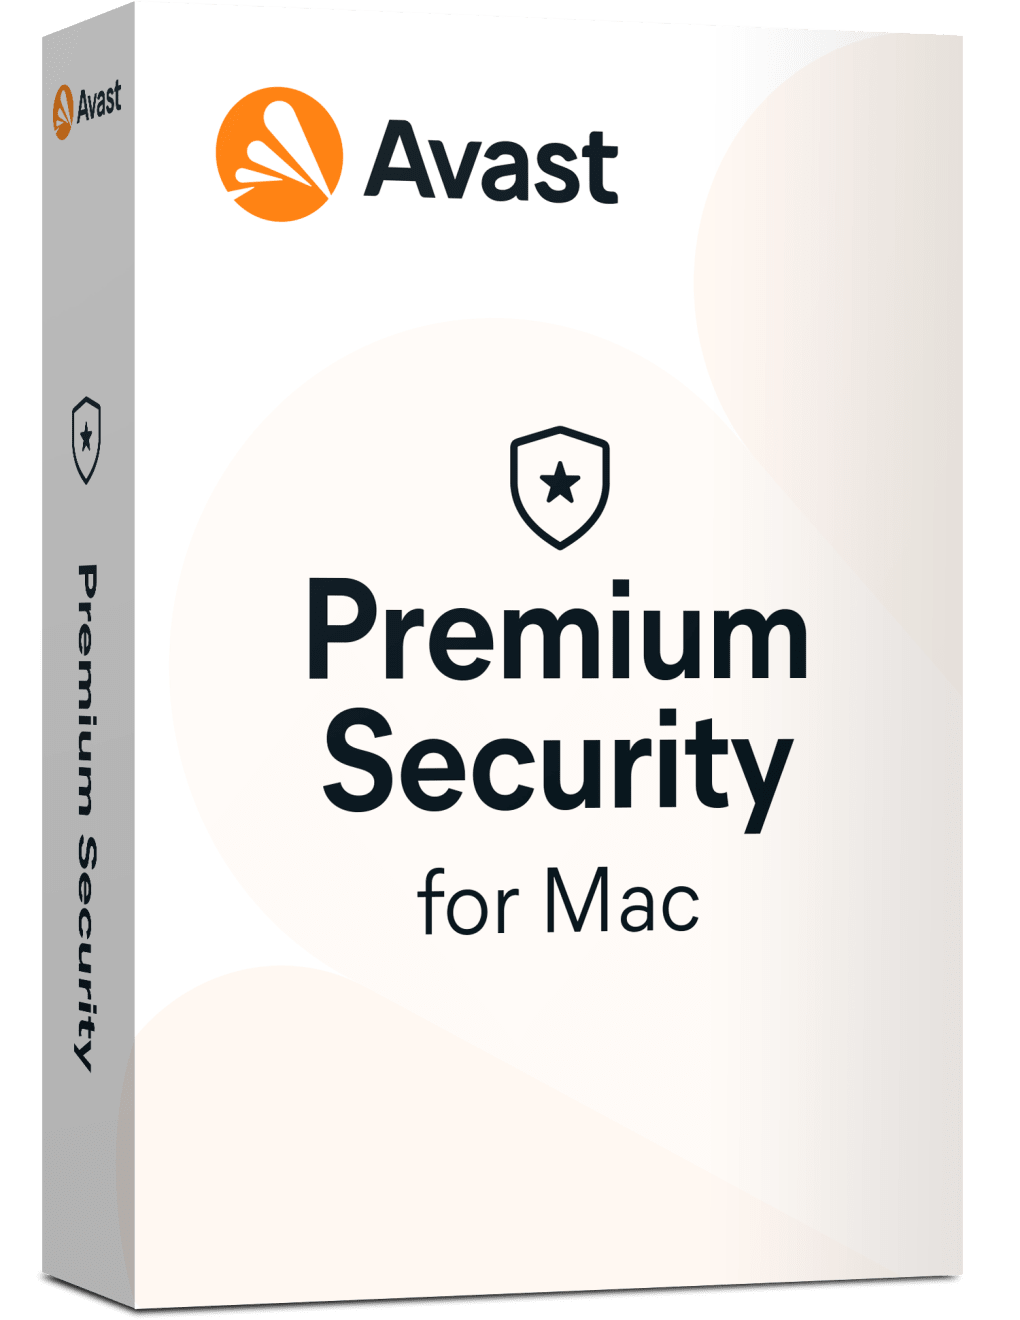 avast premium security license file download